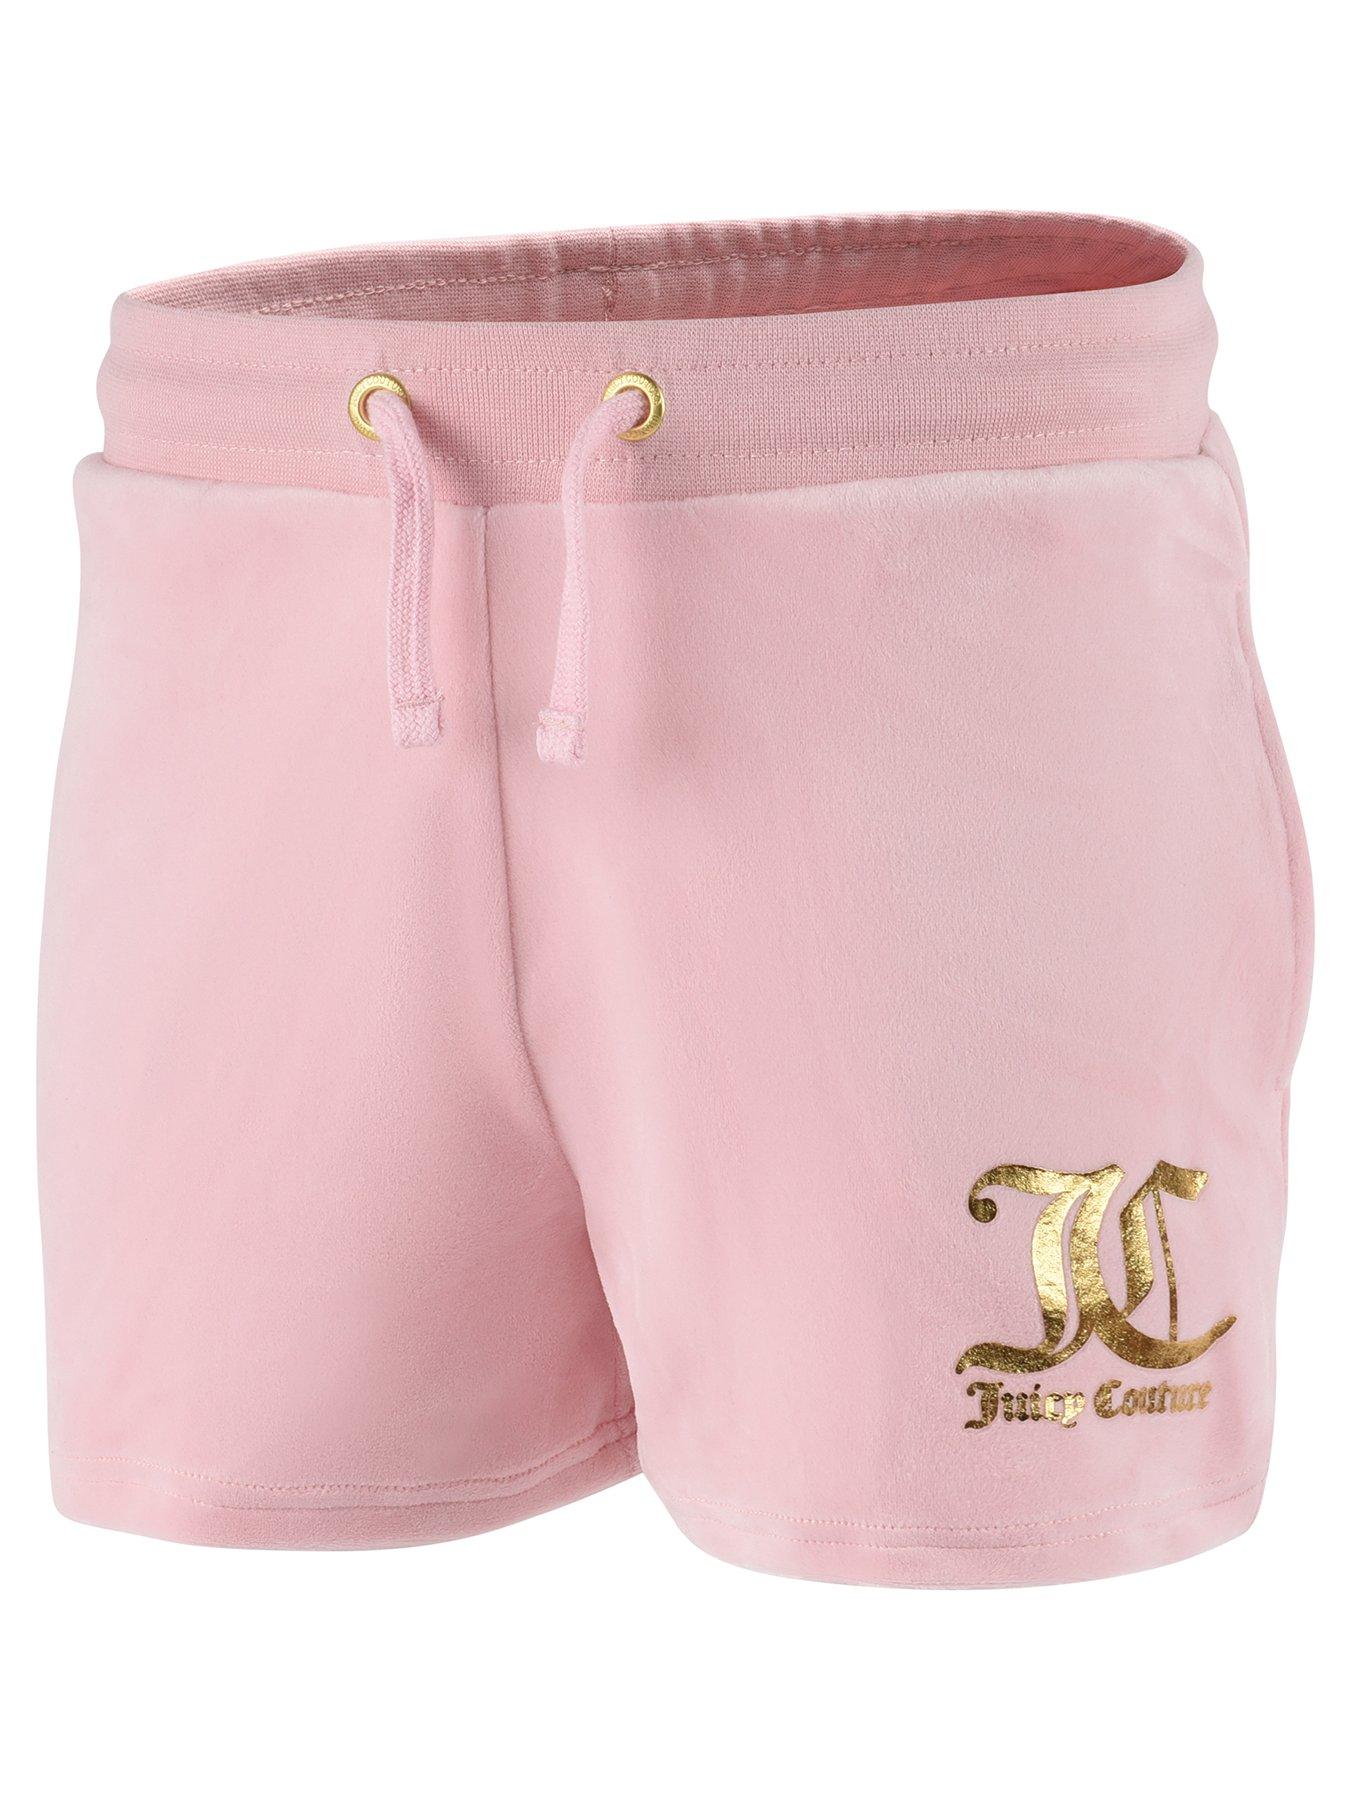 Juicy Couture Girls Velour Short - Pink | littlewoods.com